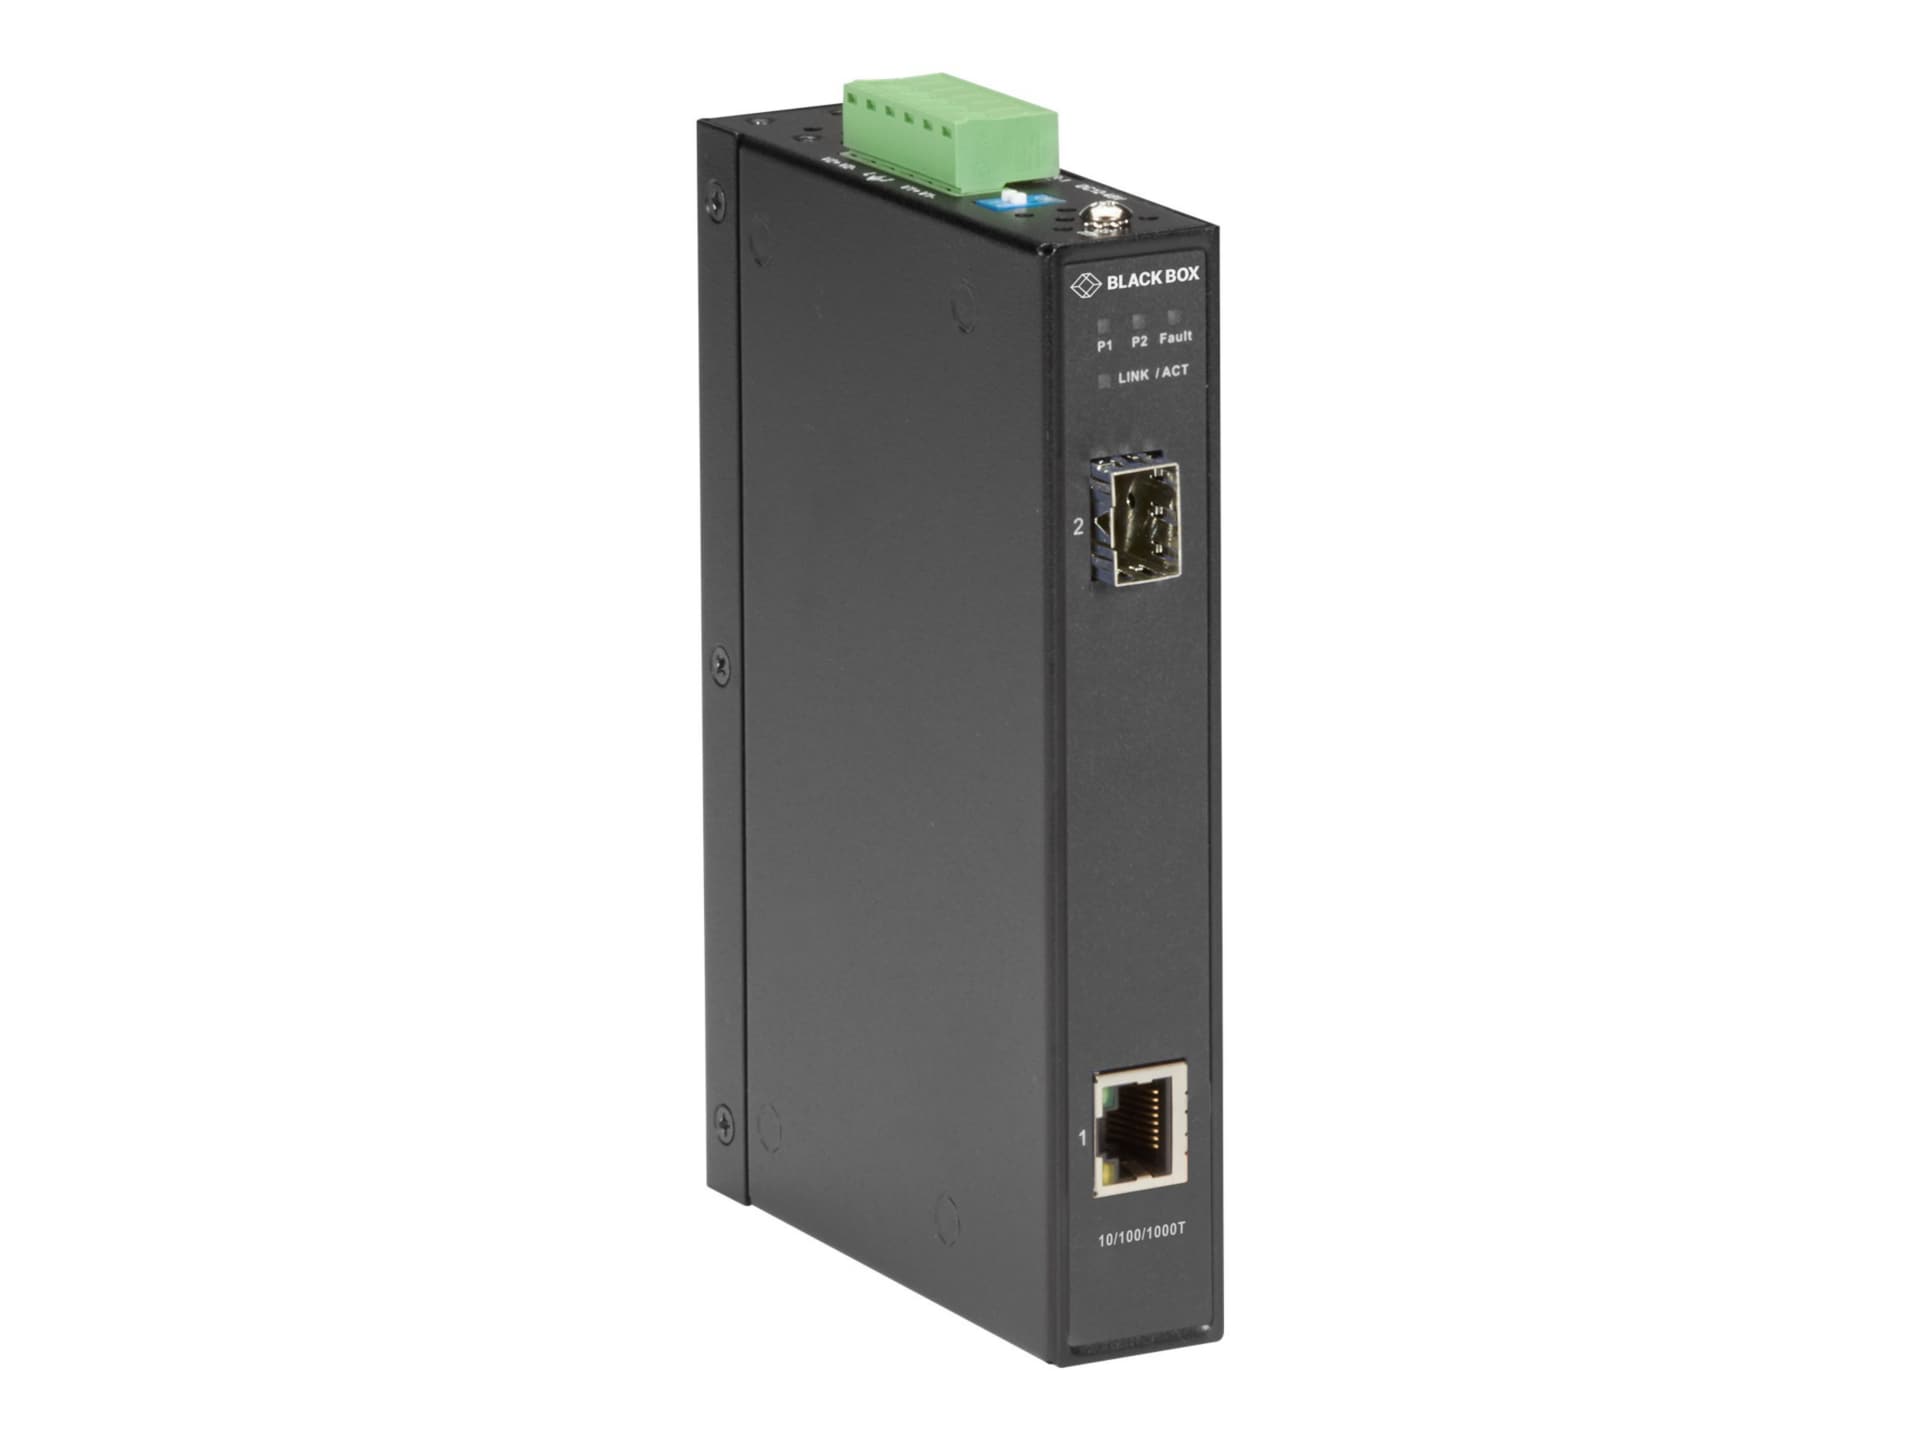 Black Box LGC280 Series LGC280A - fiber media converter - 10Mb LAN, 100Mb L